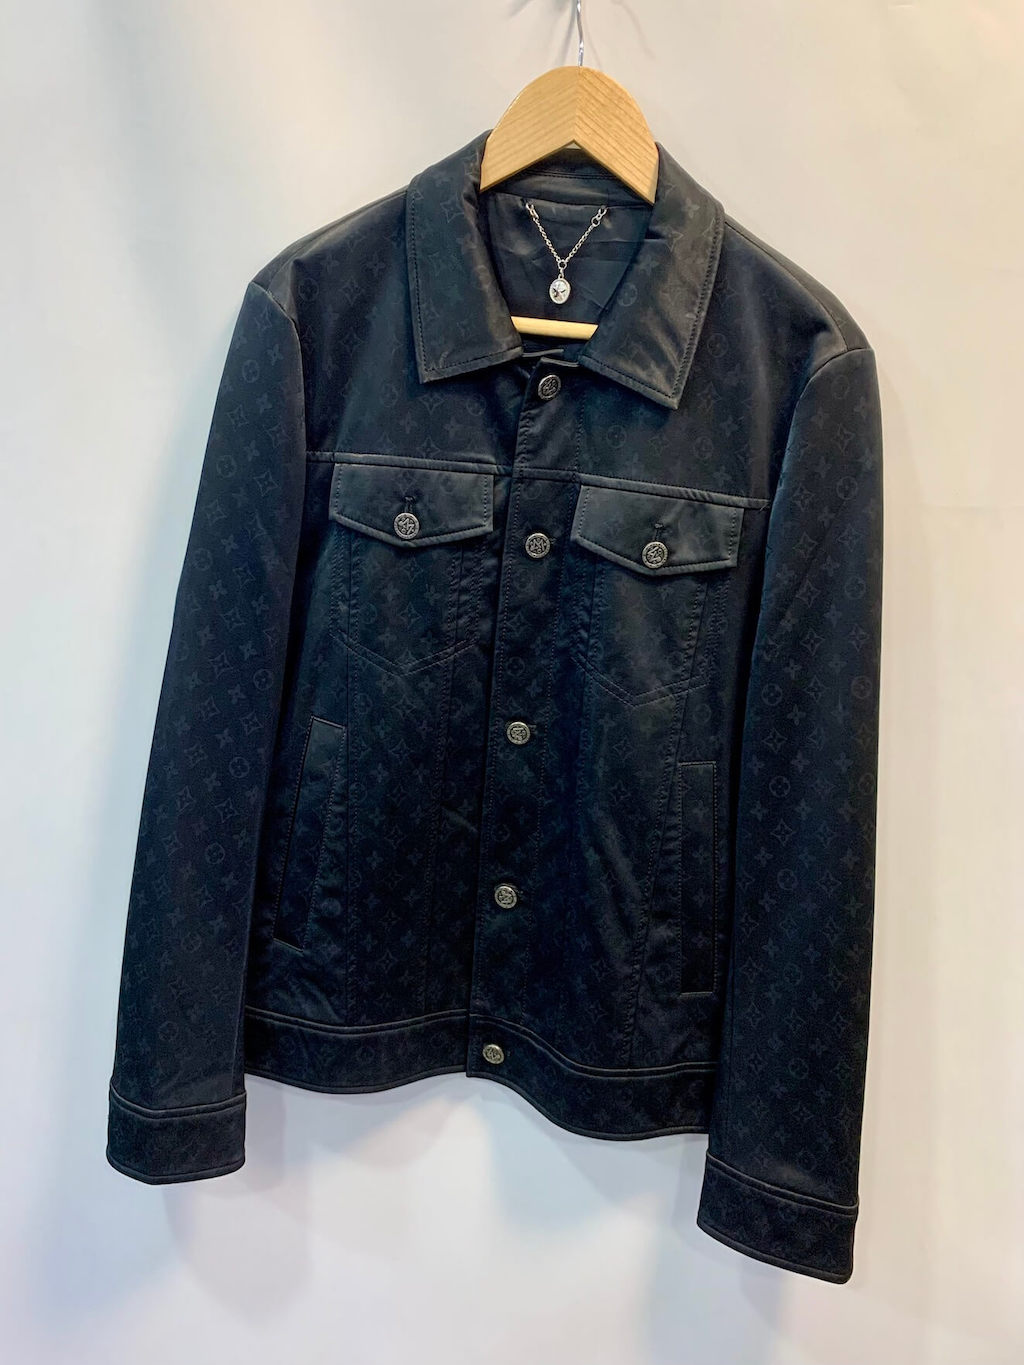 LV Leather Jacket - UnusualFashion